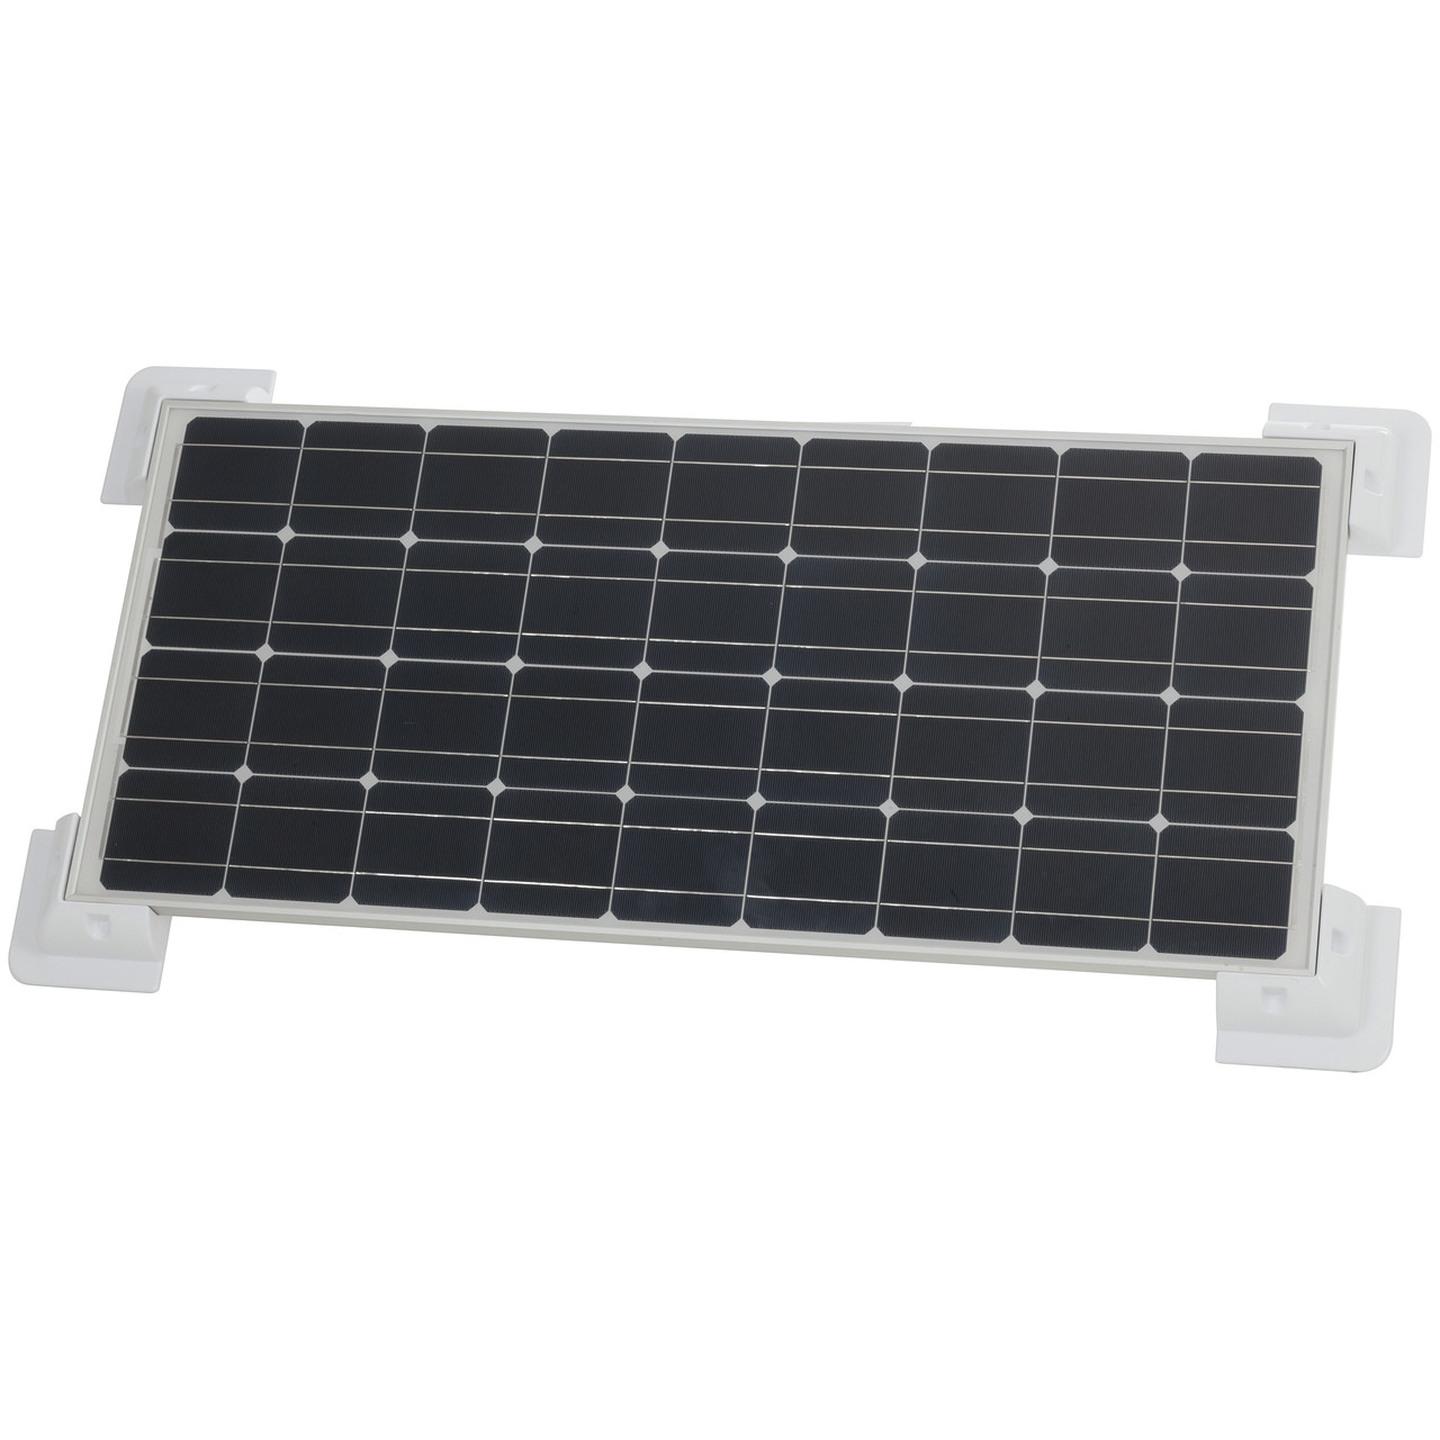 White ABS Solar Panel Corner Mounting Brackets - Set of 4